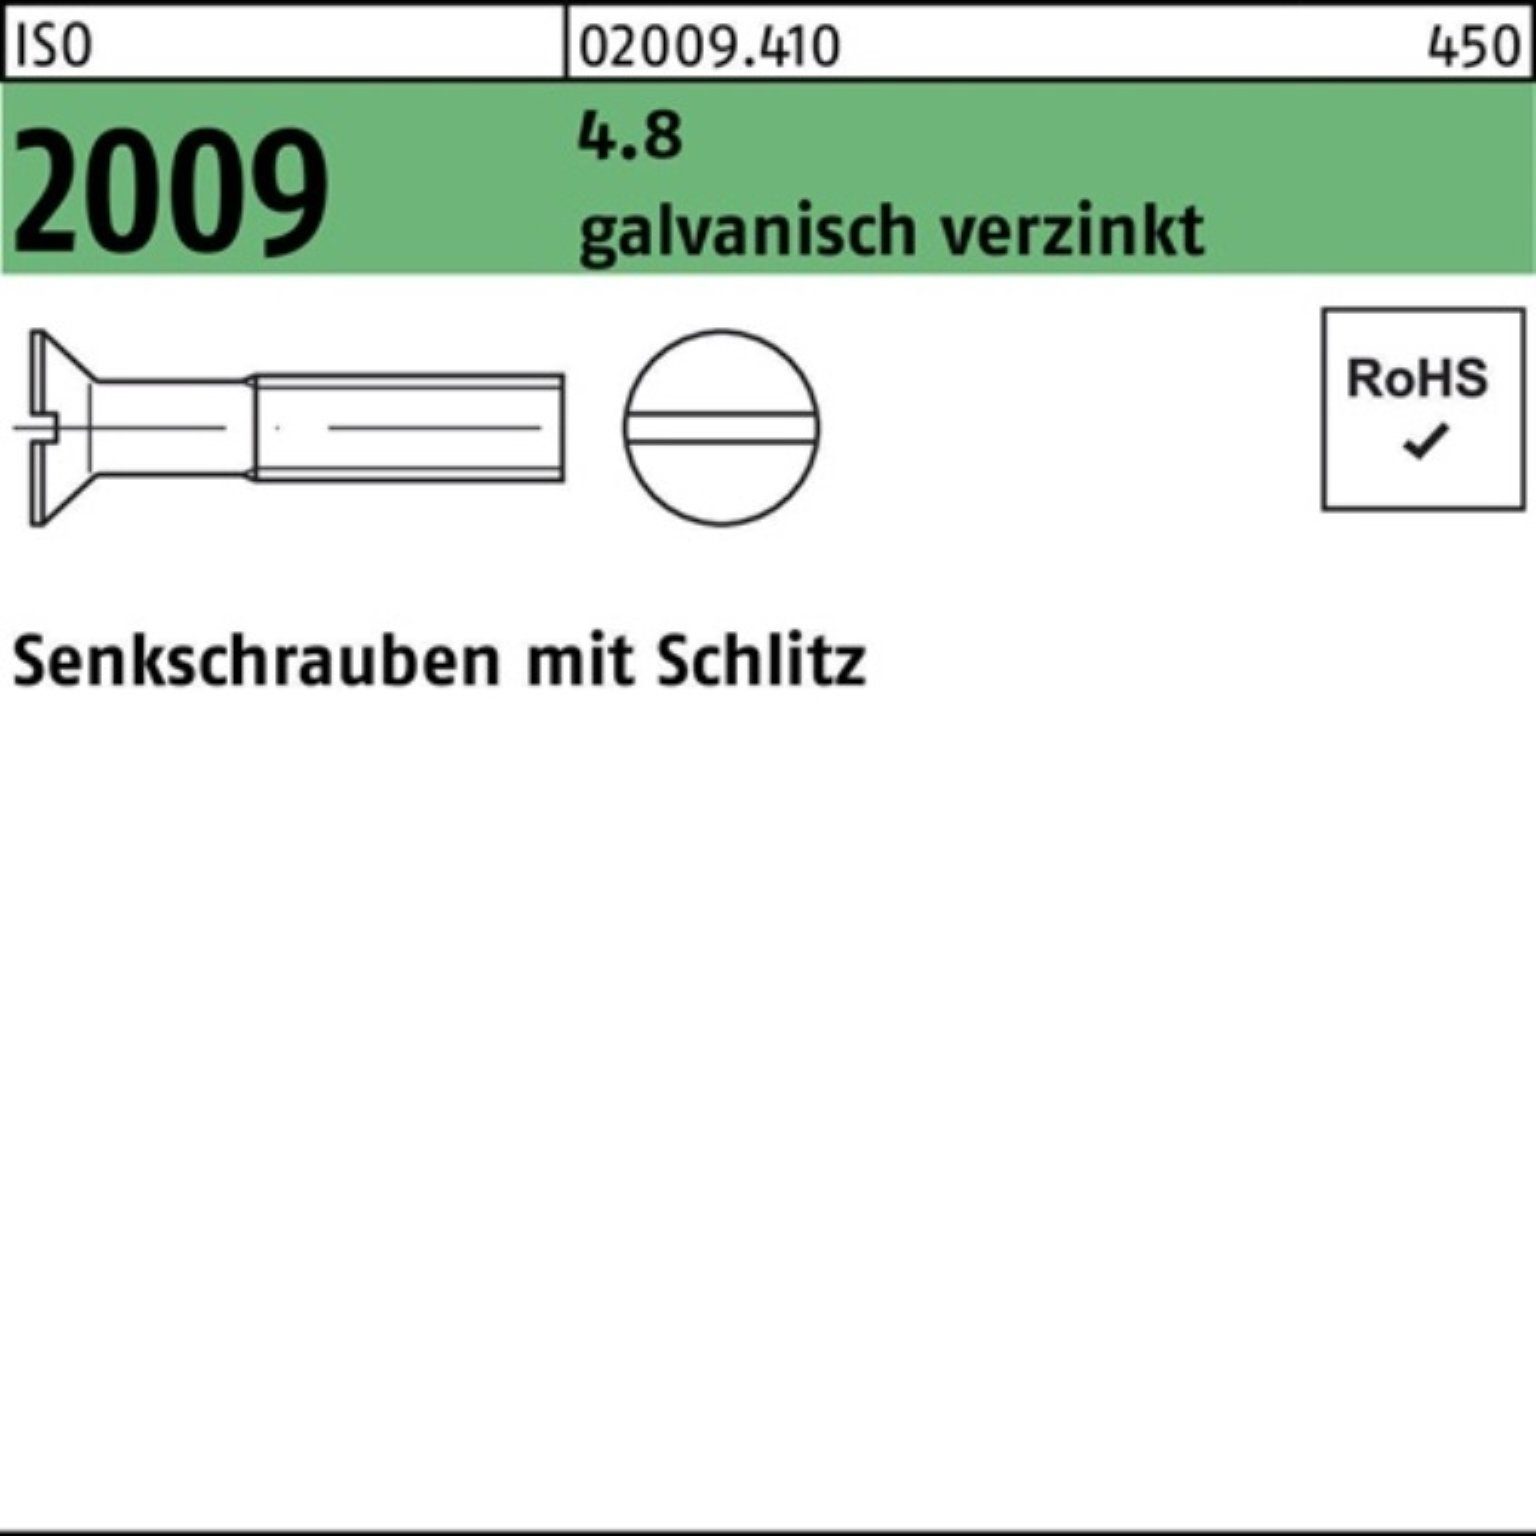 Reyher Senkschraube 1000er Pack 6 Senkschraube ISO galv.verz. St Schlitz M3x 2009 4.8 1000